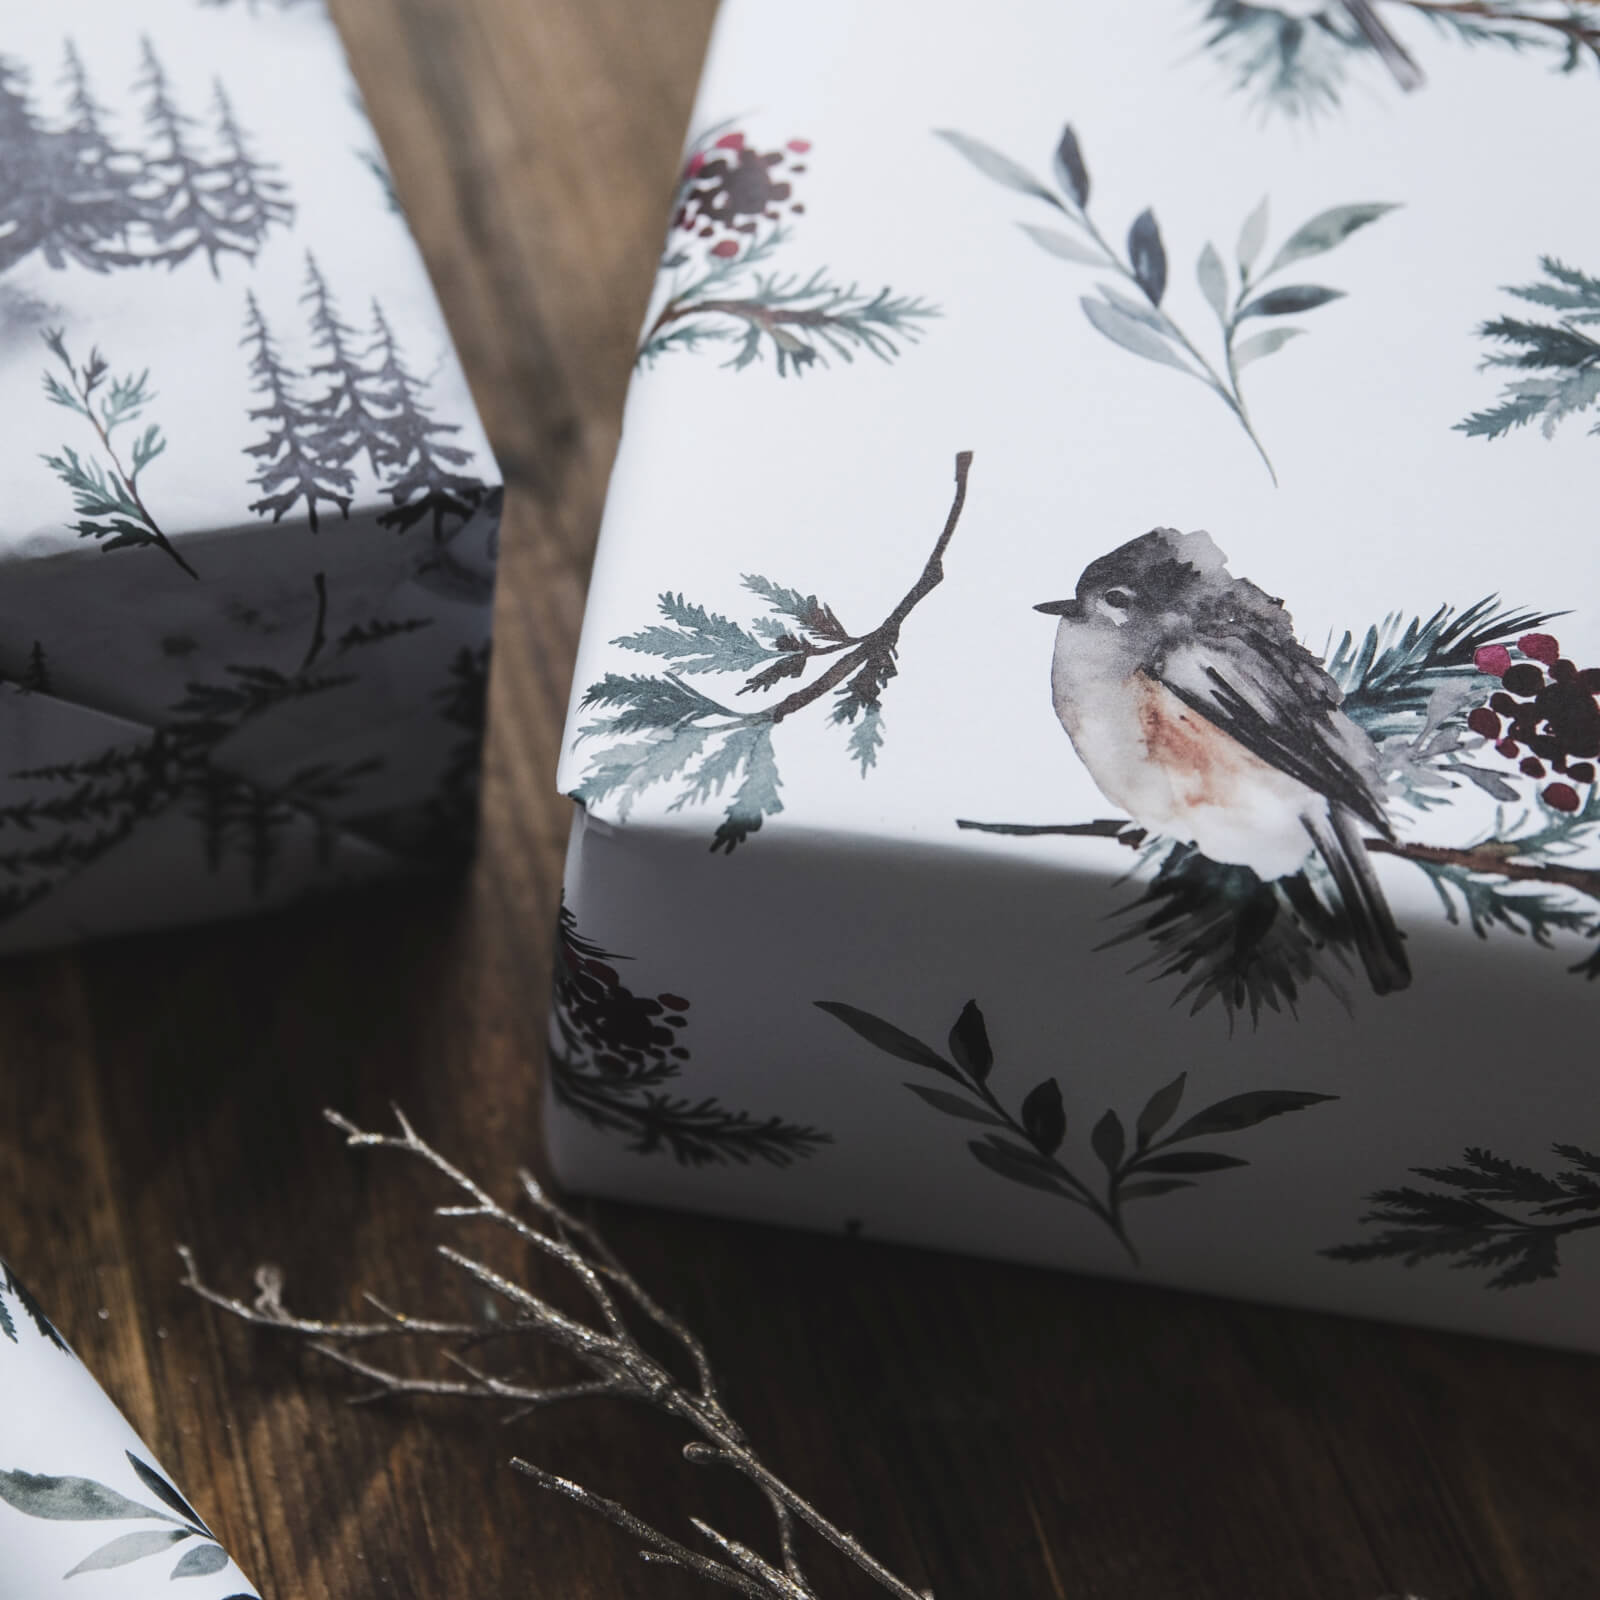 Watercolour Luxury Christmas Gift Wrap Set - I am Nat Ltd - Gift Wrap